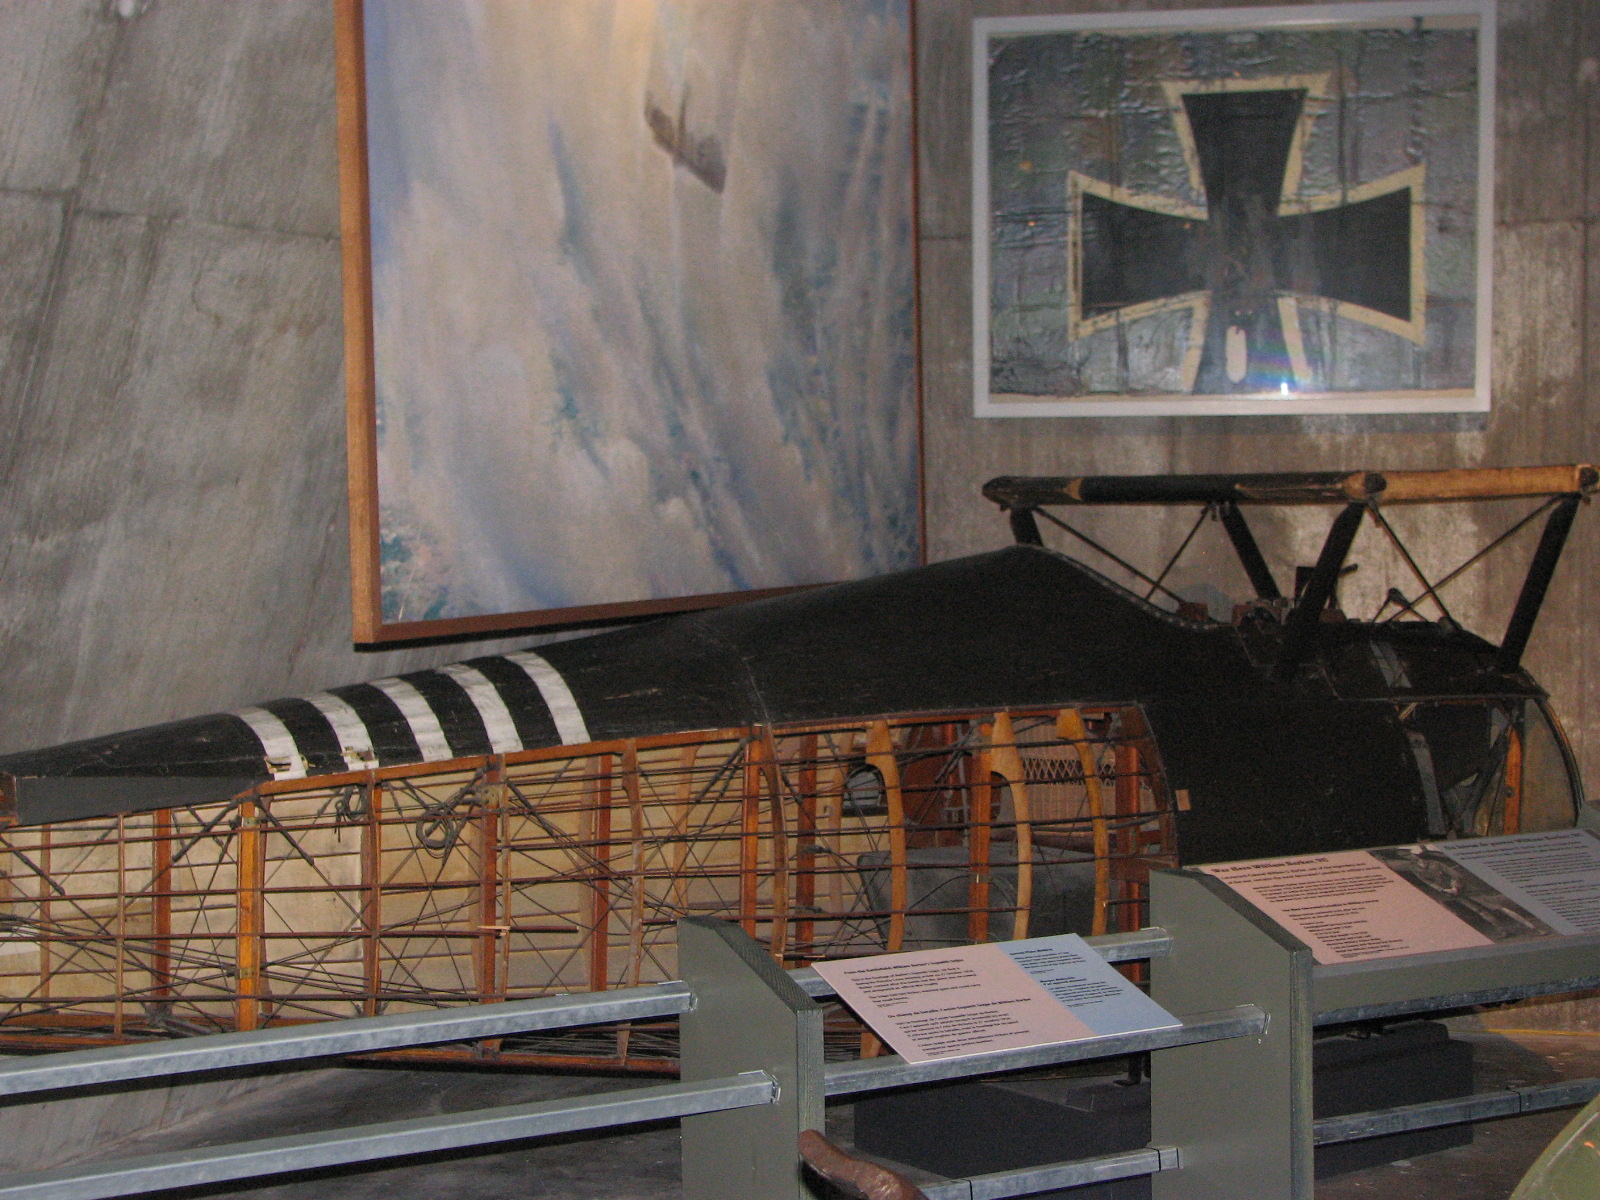 Barker fuselage